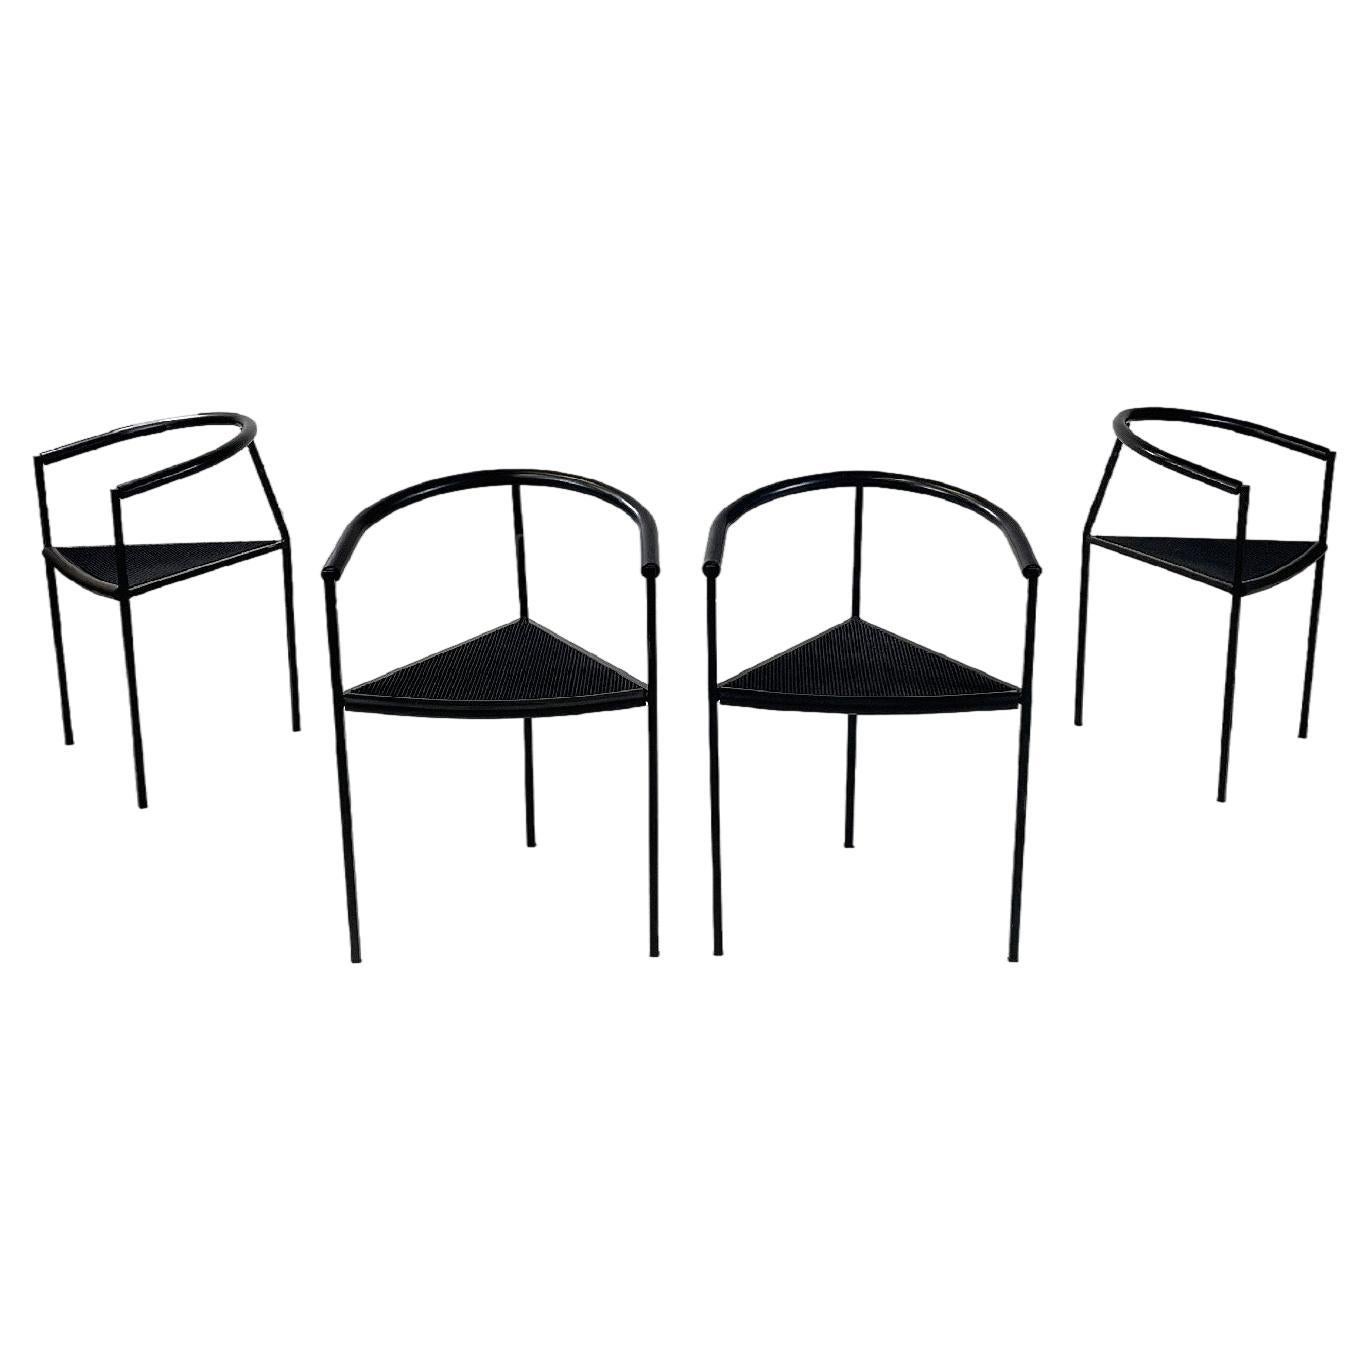 Italian modern black metal rubber chairs by Peregalli Calatroni for Zeus, 1990s